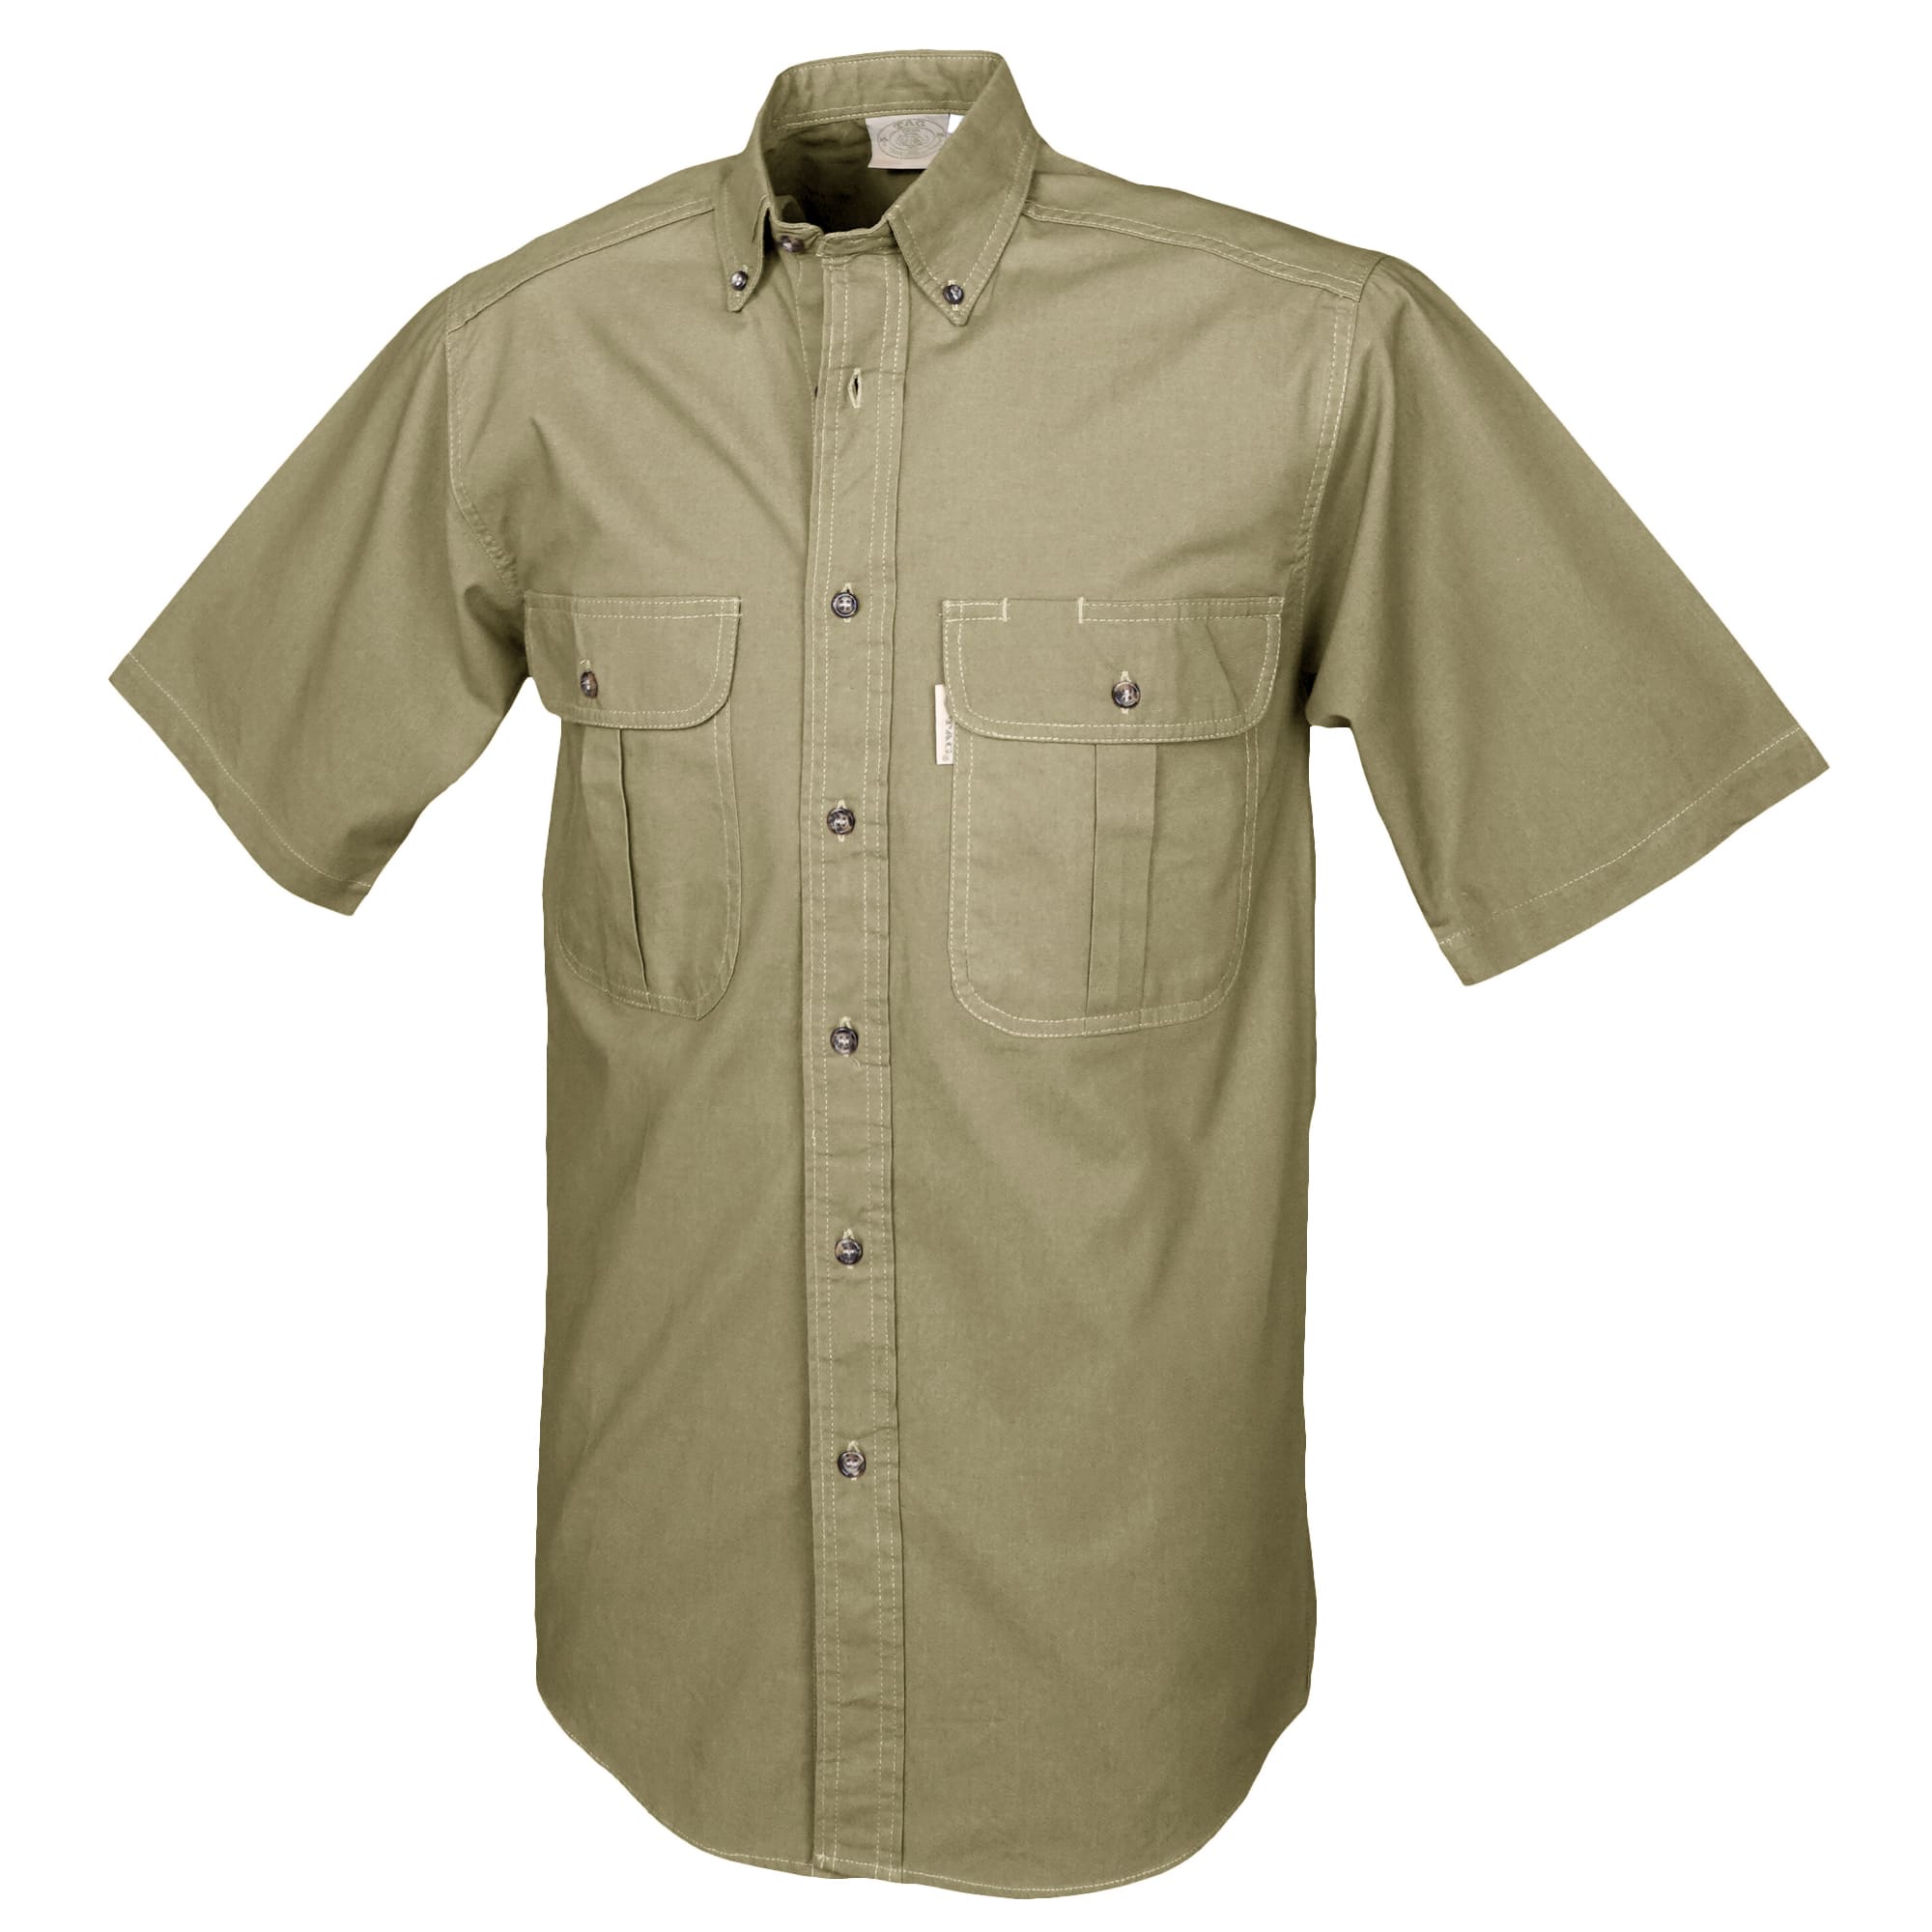 Tag Safari Men's Safari Short Sleeve Shirt W Chest Pockets (Khaki, Medium)